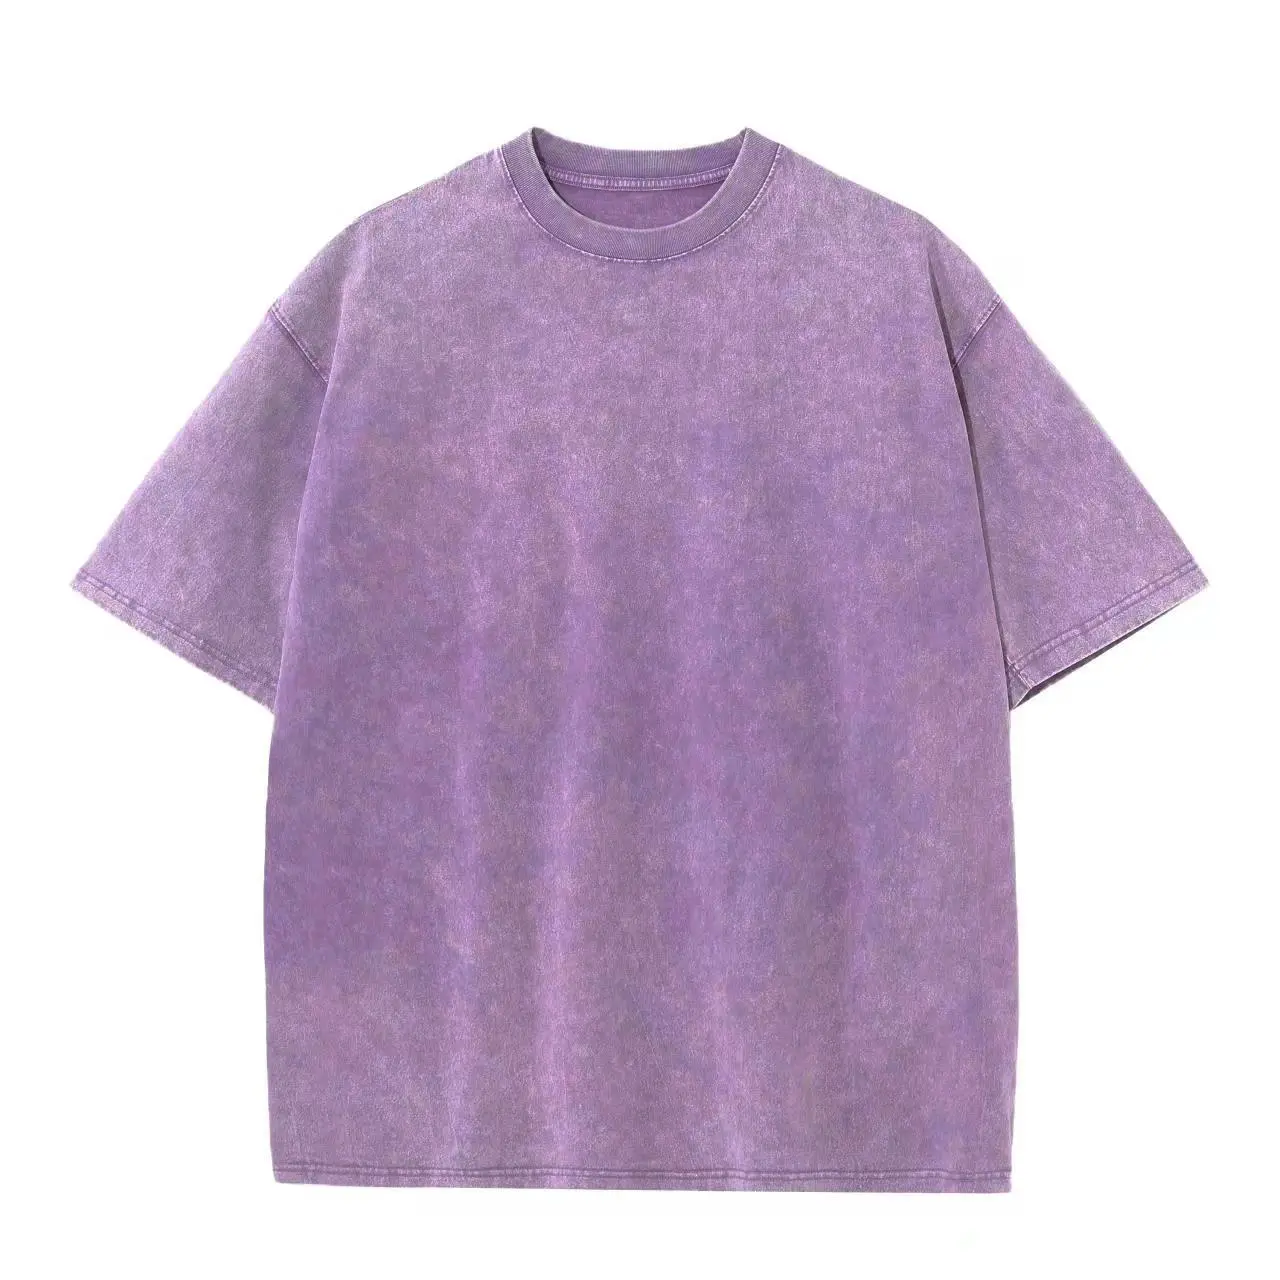 YUDI In Stock Tshirt Men's Oversized Tshirt 100% Cotton T-shirt Manufacturer Streetwear Hip Hop Blank Acid Wash Vintage Tshirts